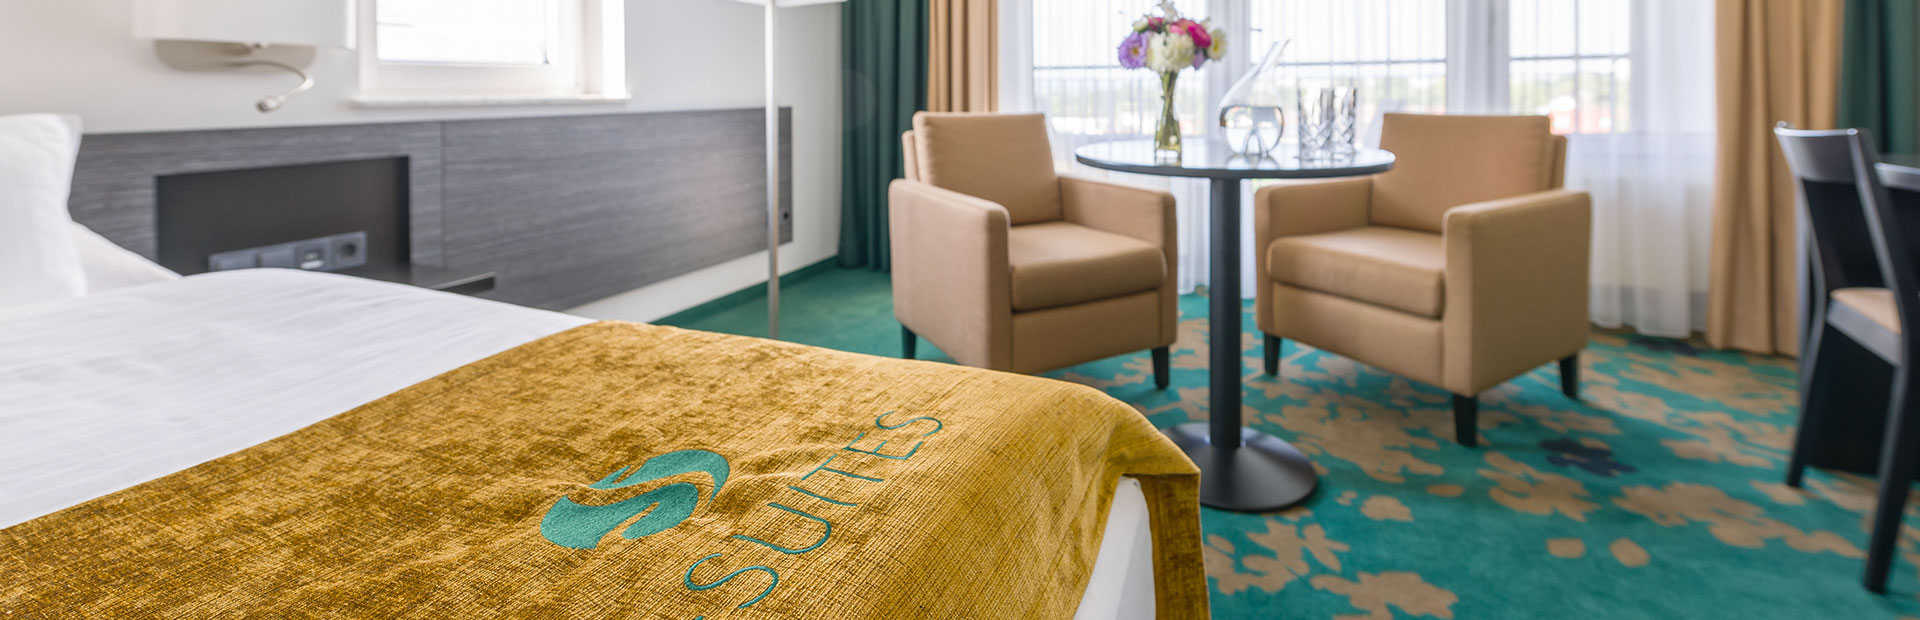 Economy room bed detail at SI-SUITES Hotel Stuttgar